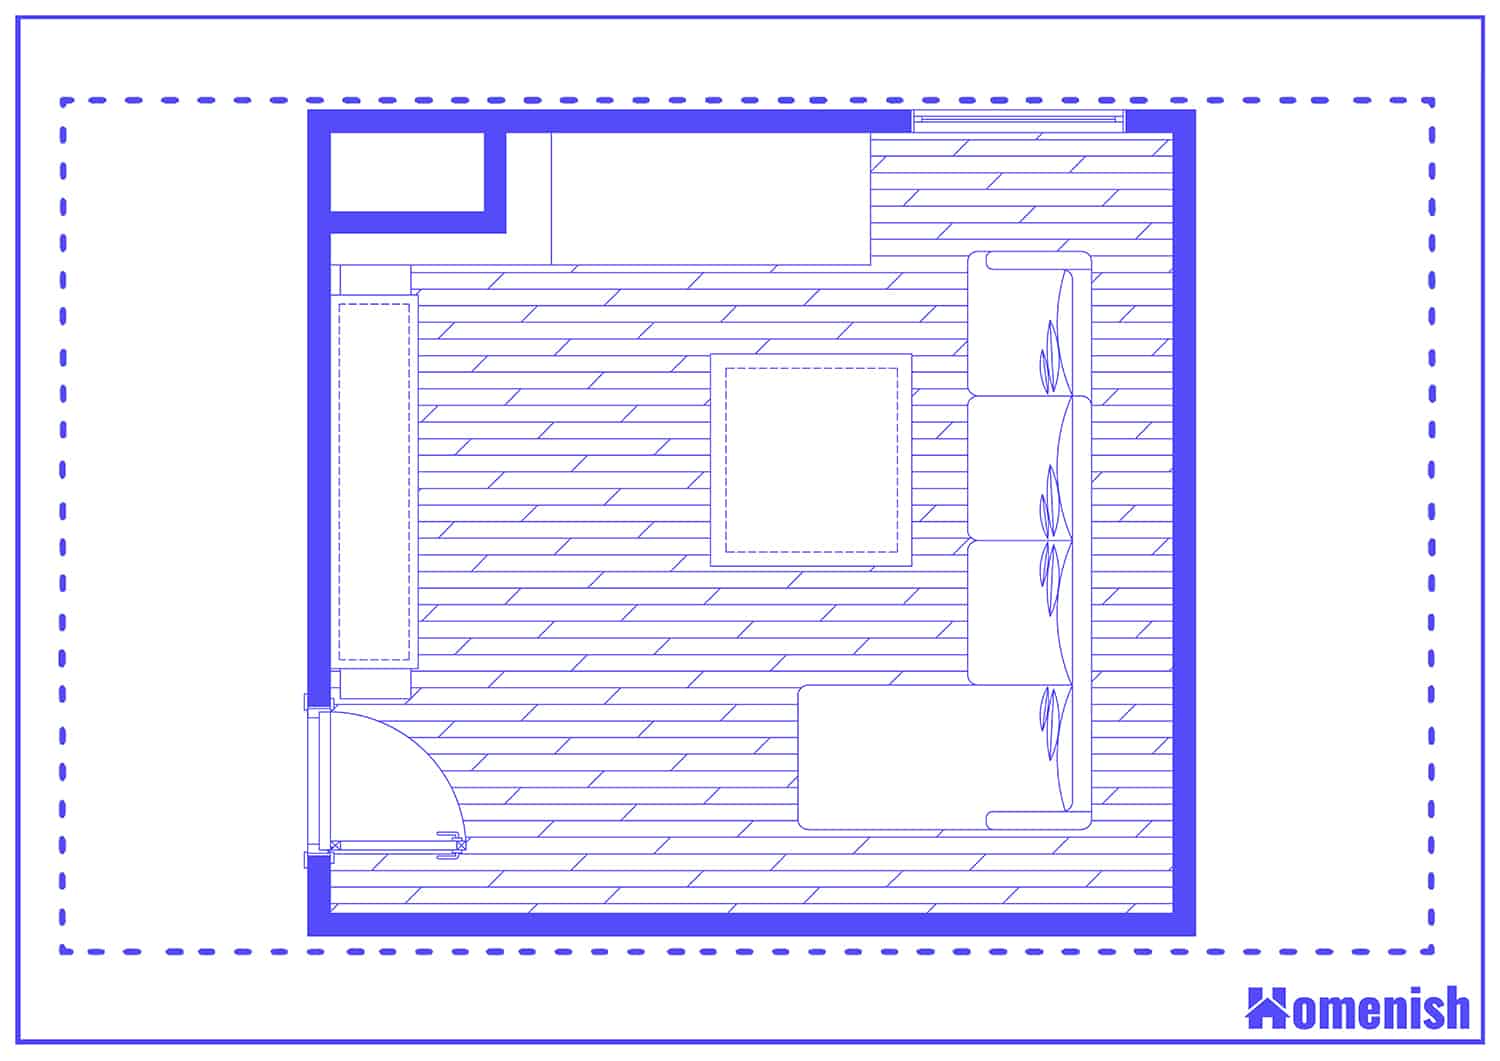 Integrated Fireplace in Living Room Floor Plan